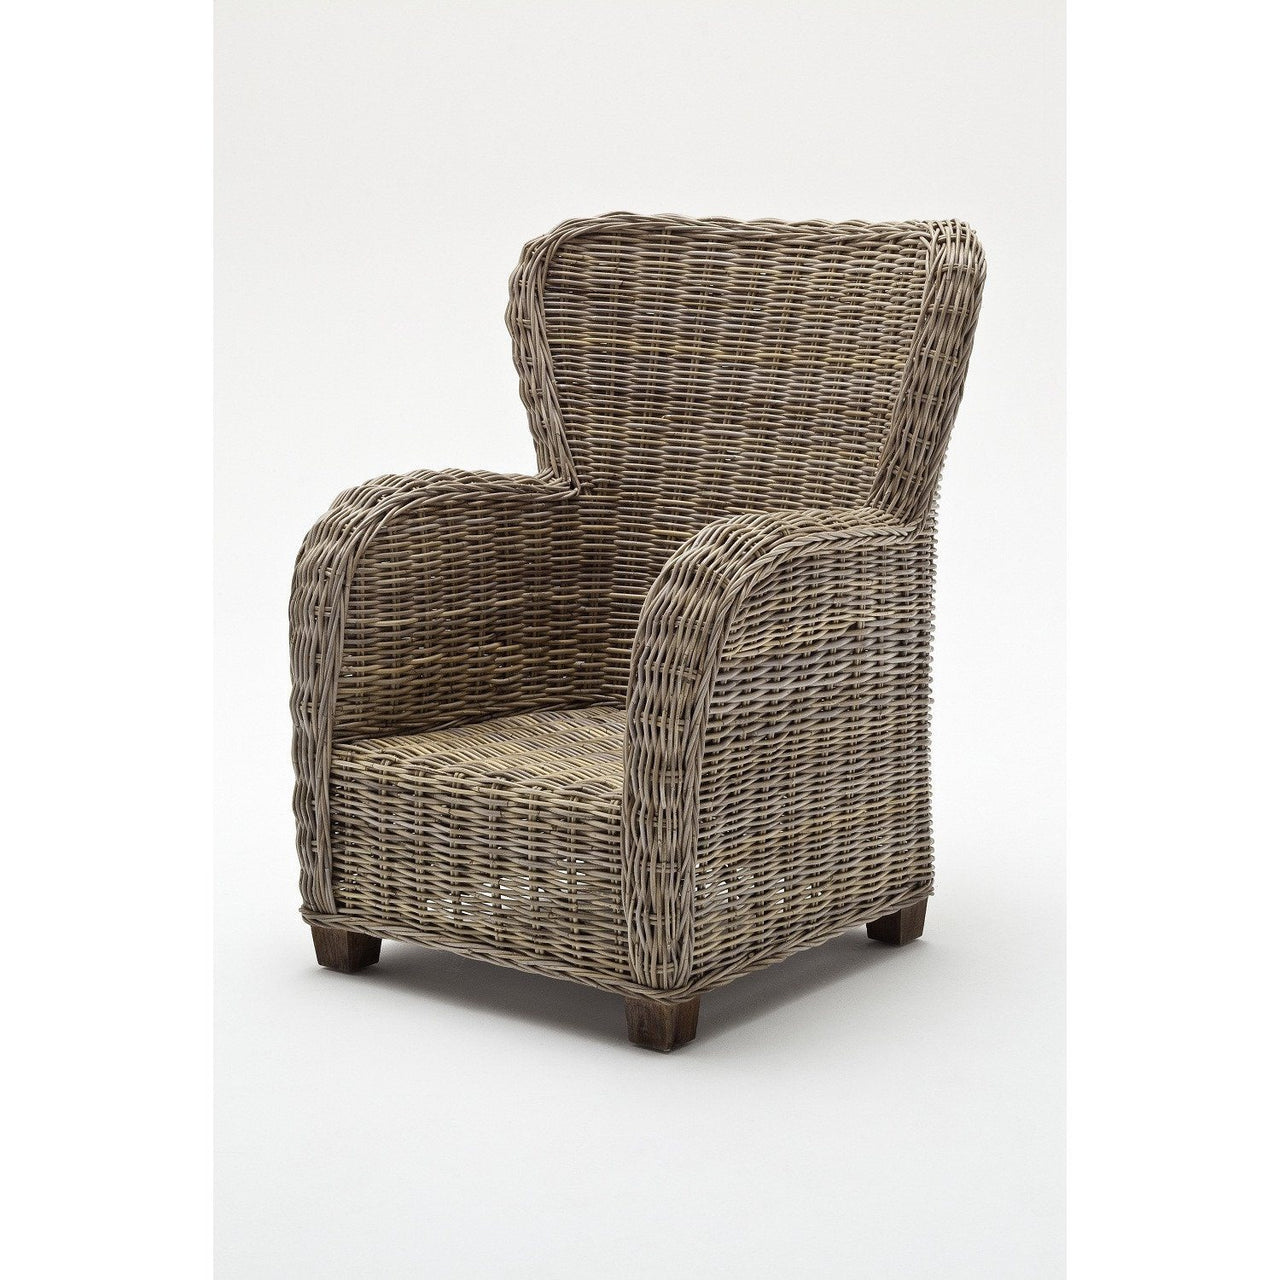 NovaSolo Wickerworks CR42 Queen Chair with seat & back cushions Chair NovaSolo 